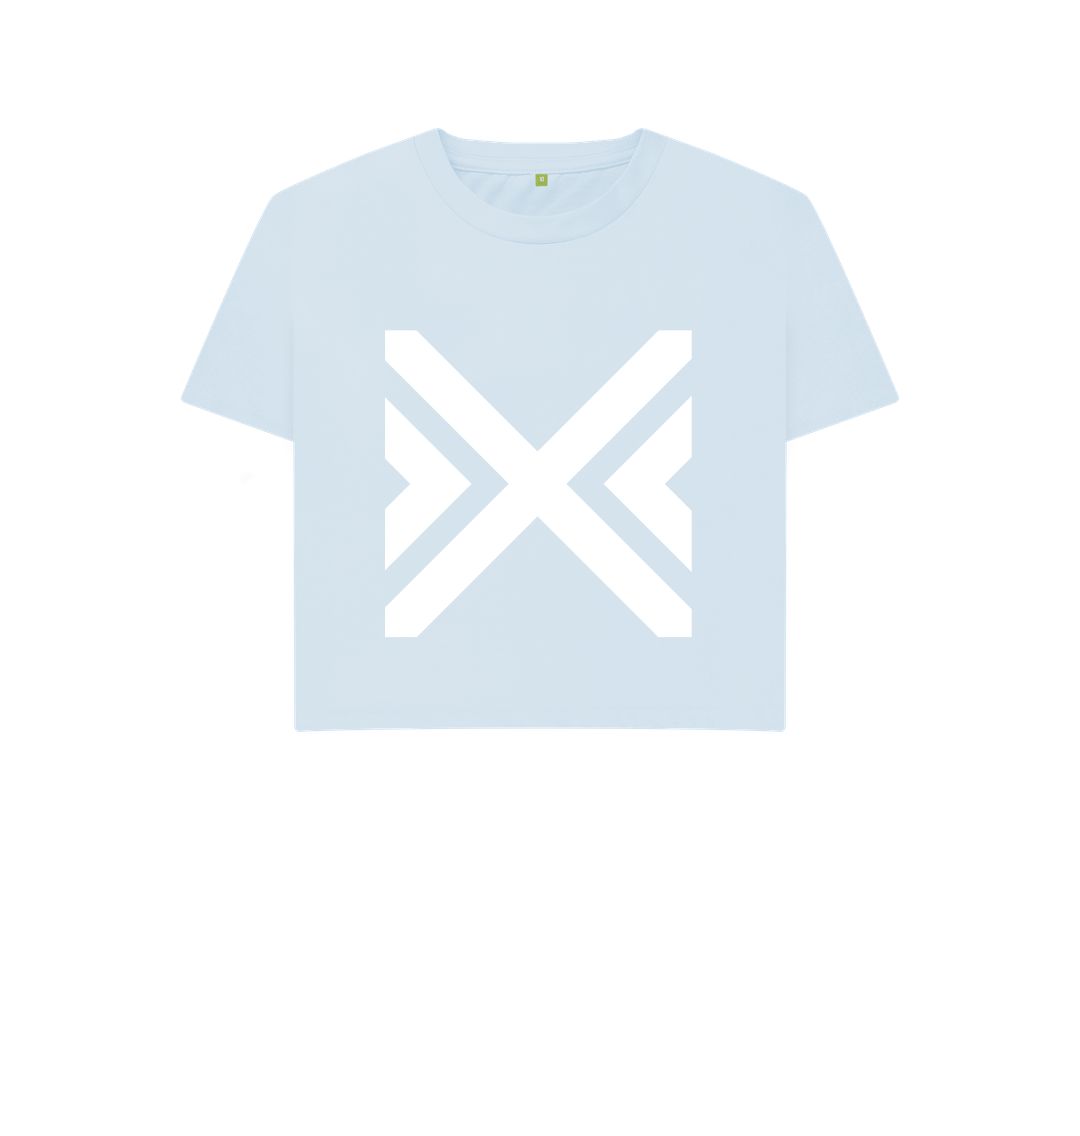 Sky Blue Cross T-shirts - Women's Boxy Tees